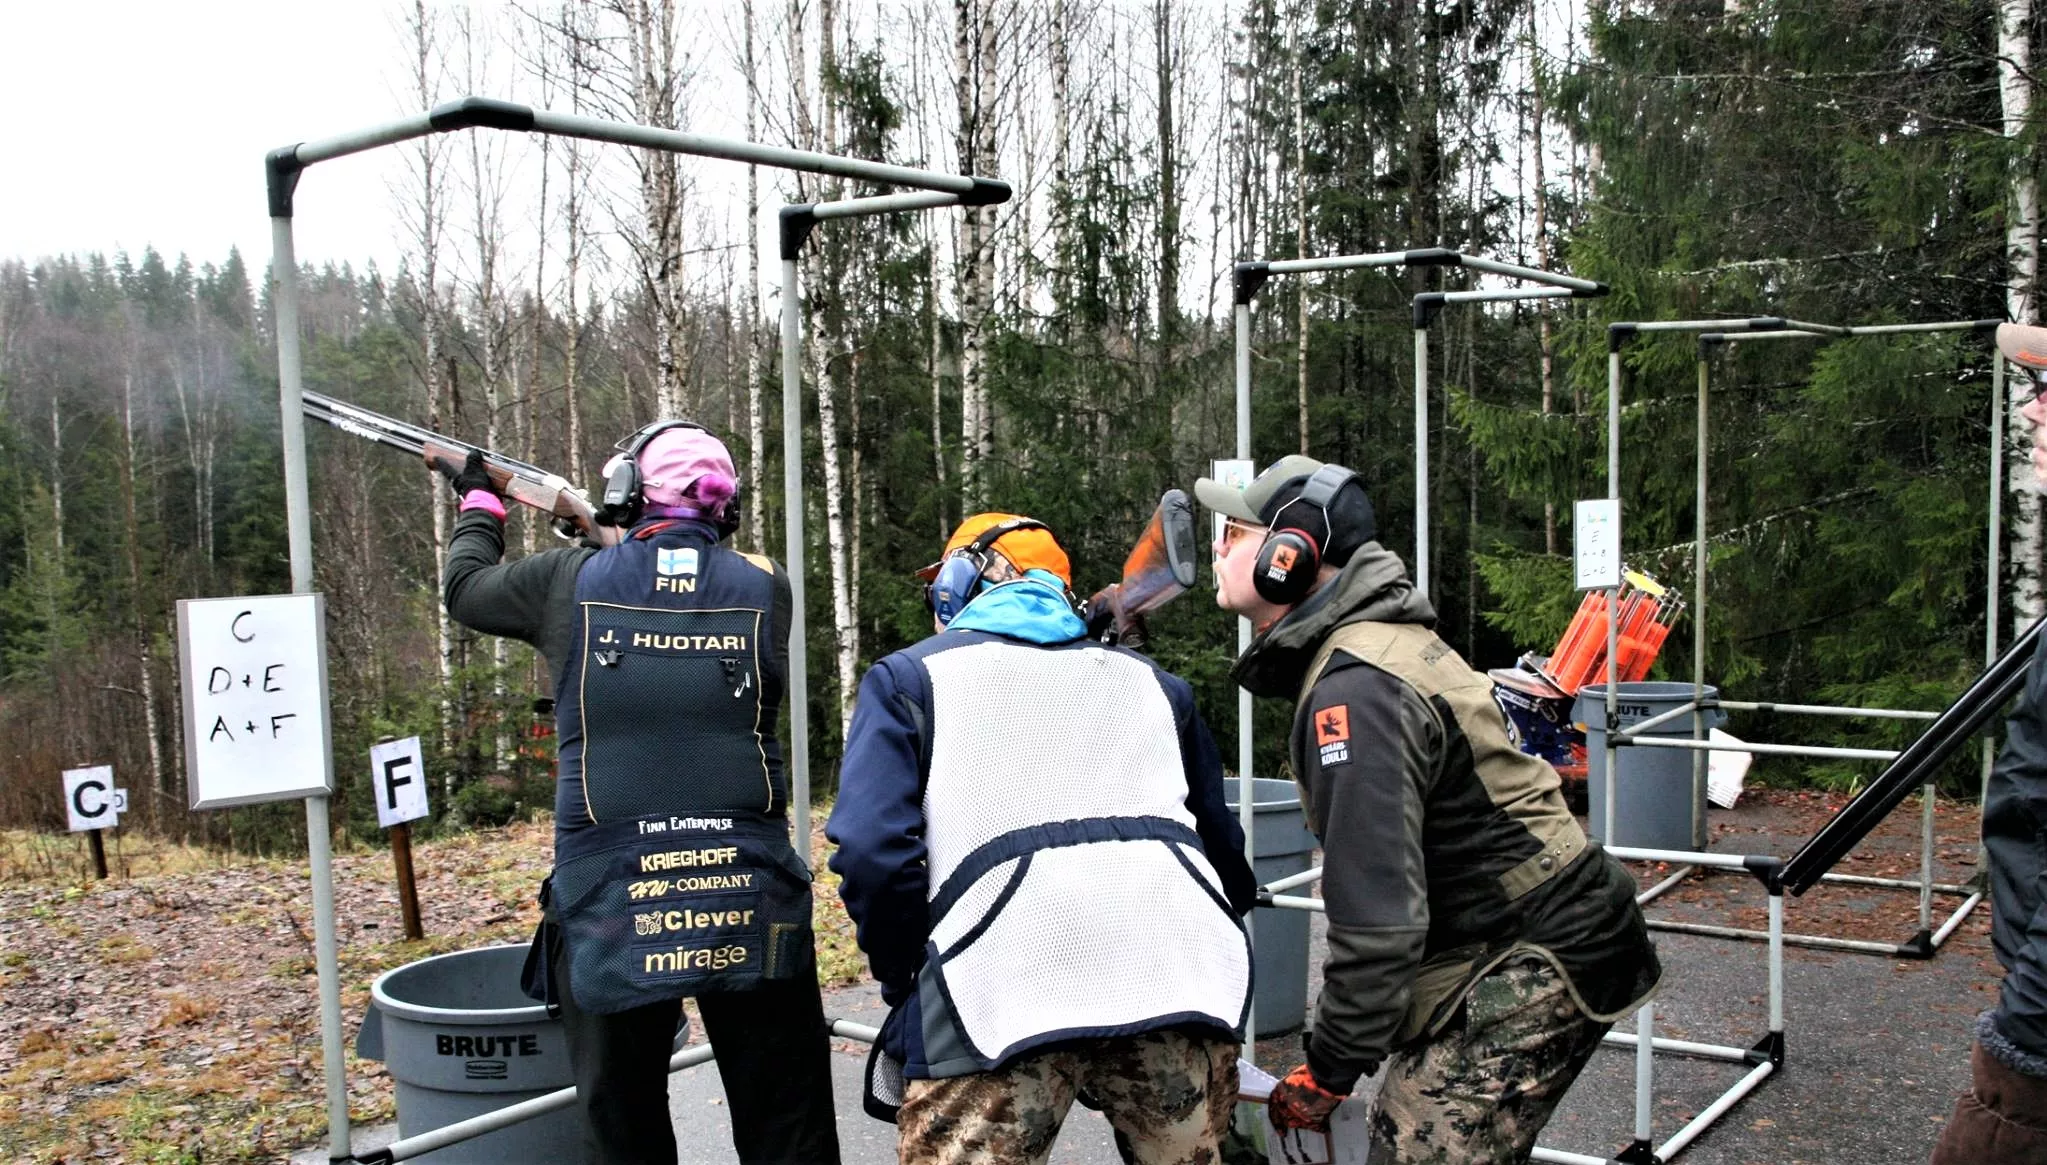 SSG haulikkorata in Finland, Europe | Gun Shooting Sports - Rated 0.9